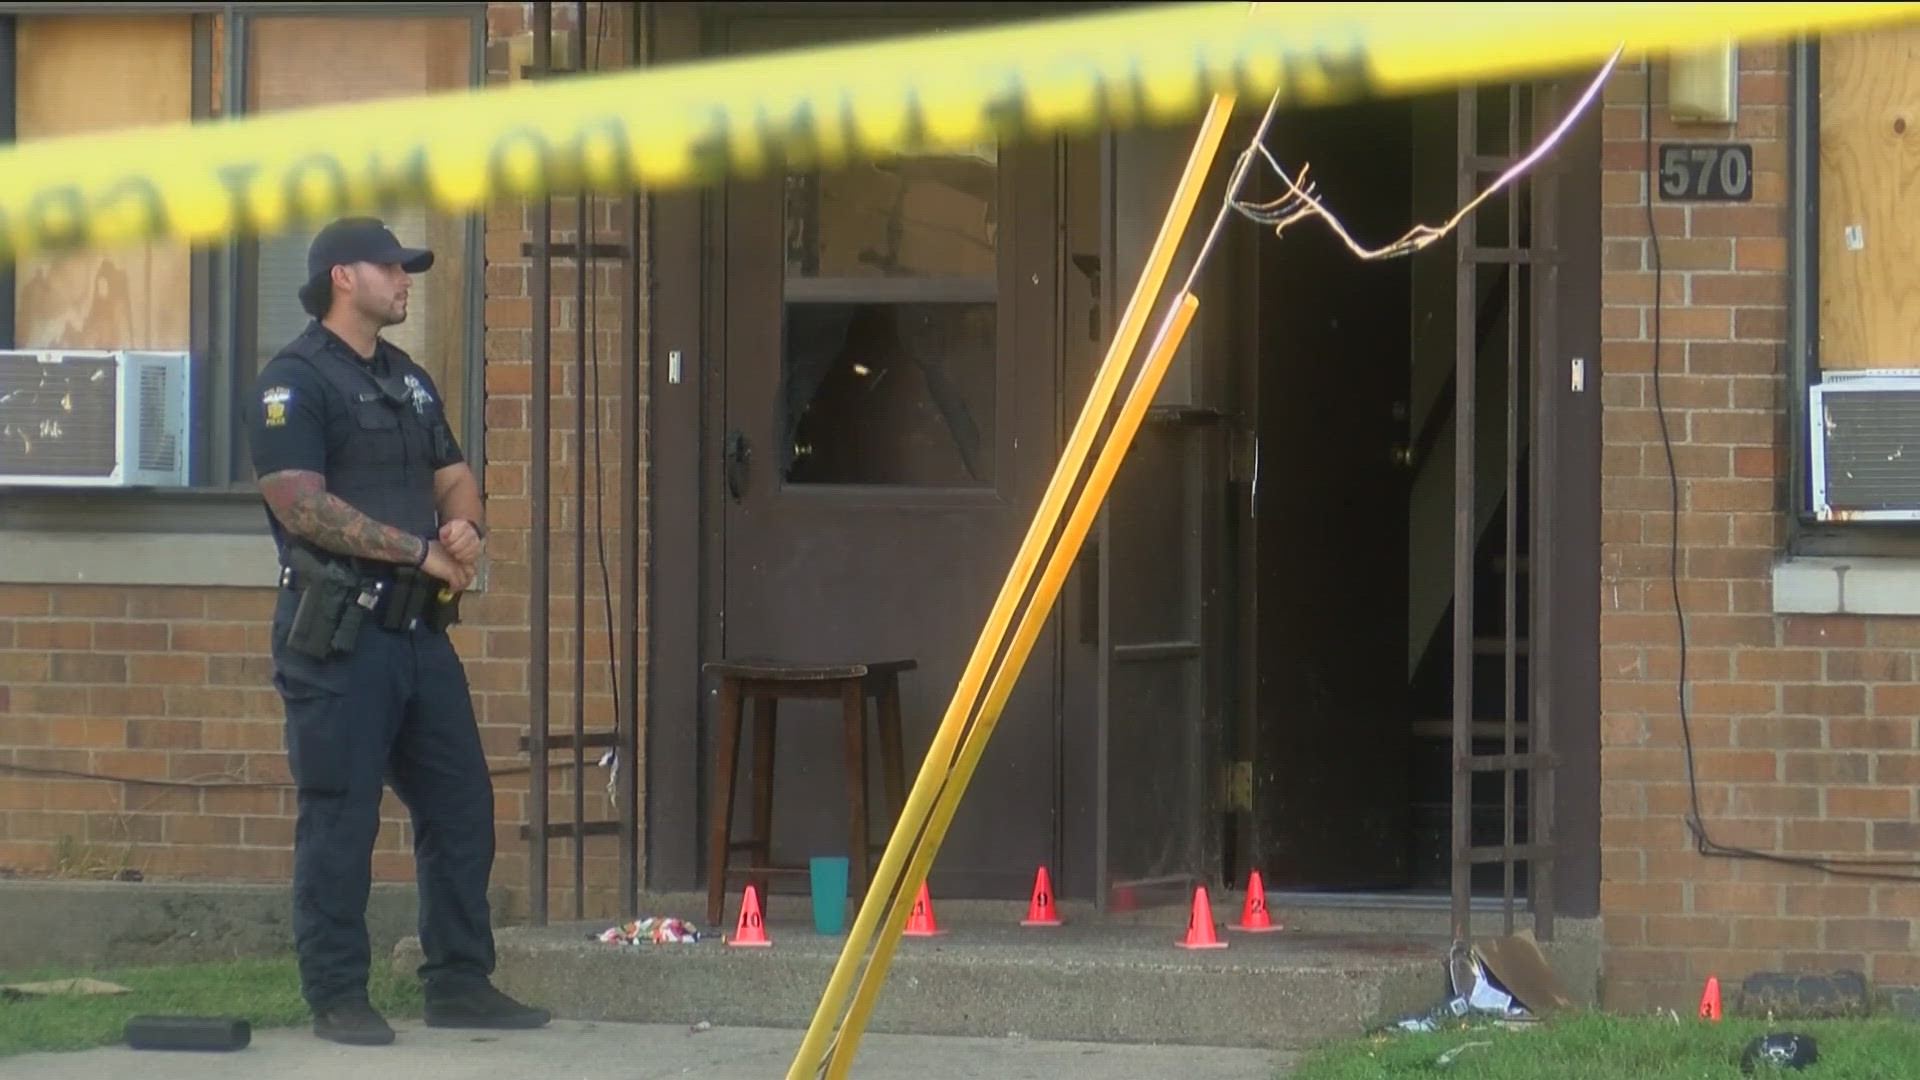 The incident happened around 5:30 p.m. at the east Toledo public housing complex.